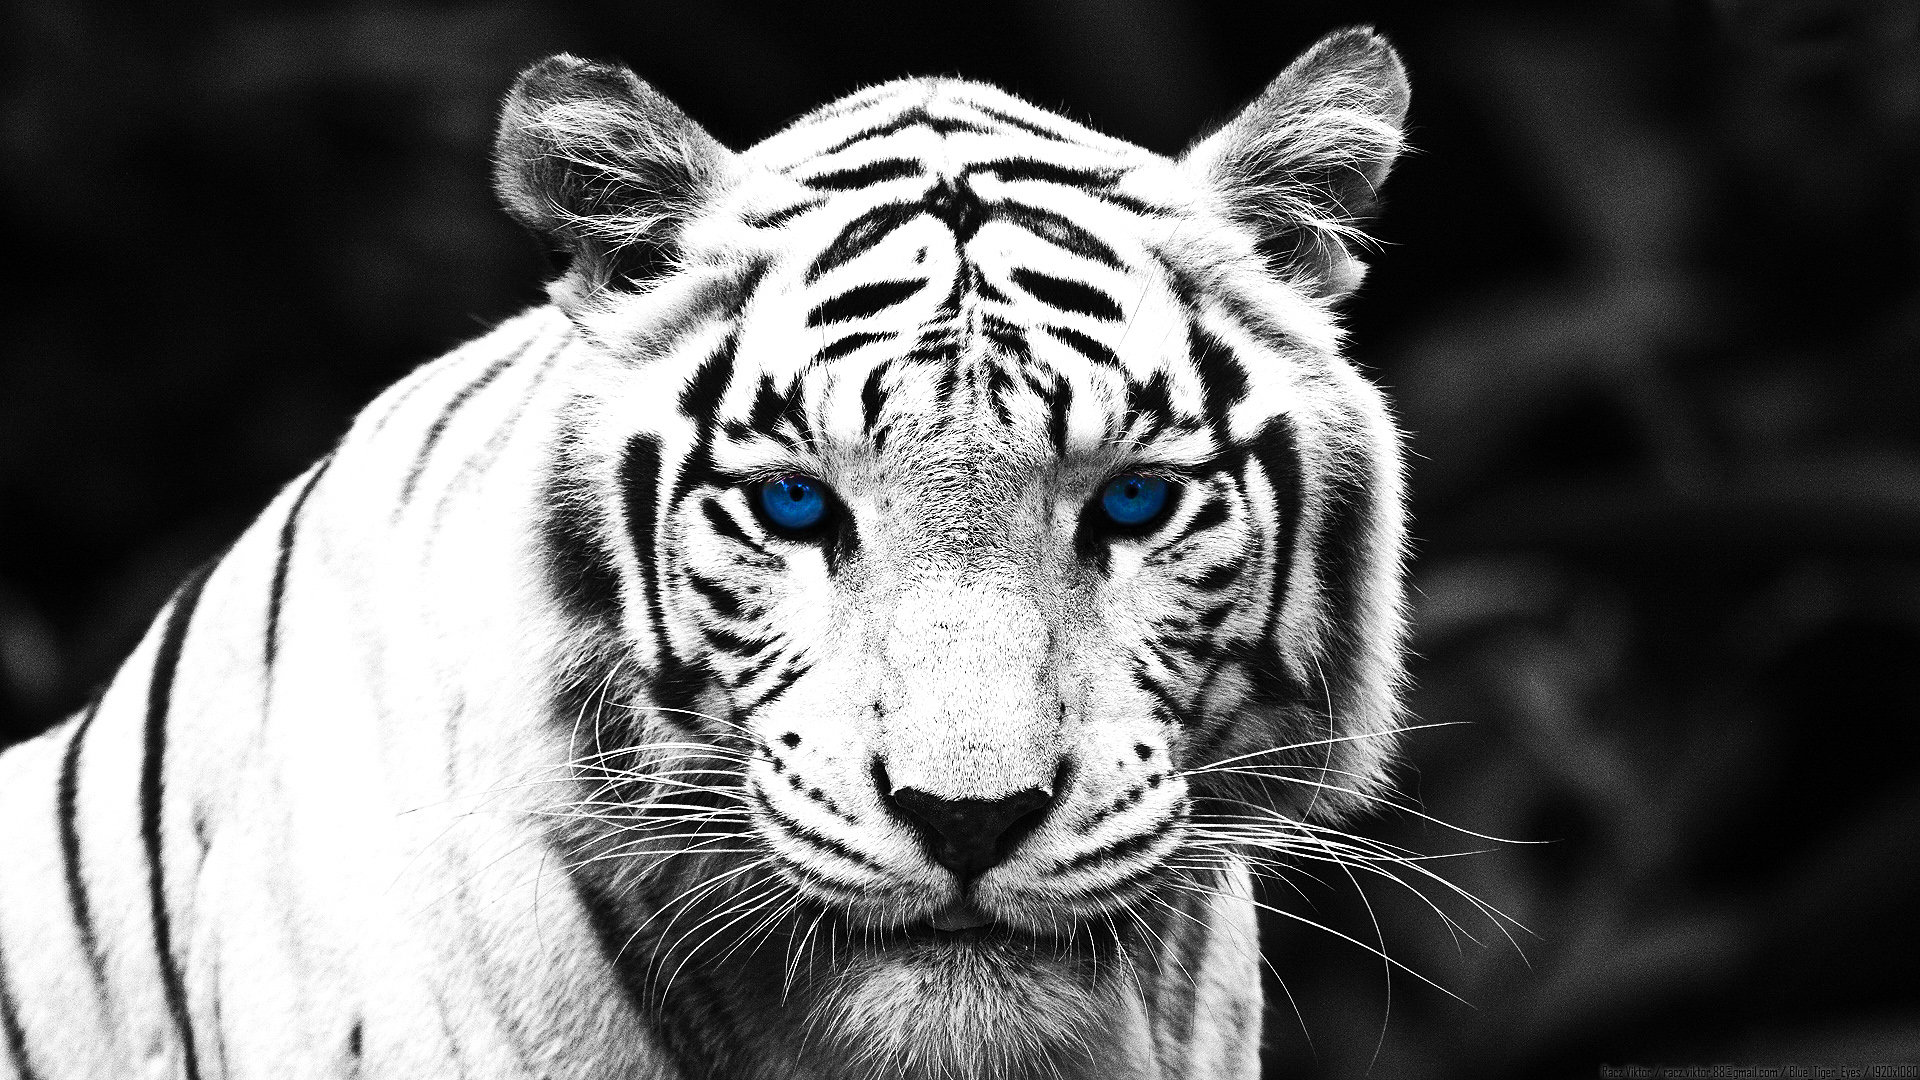 White Tiger wallpaper 1920x1080 Full HD (1080p) desktop background